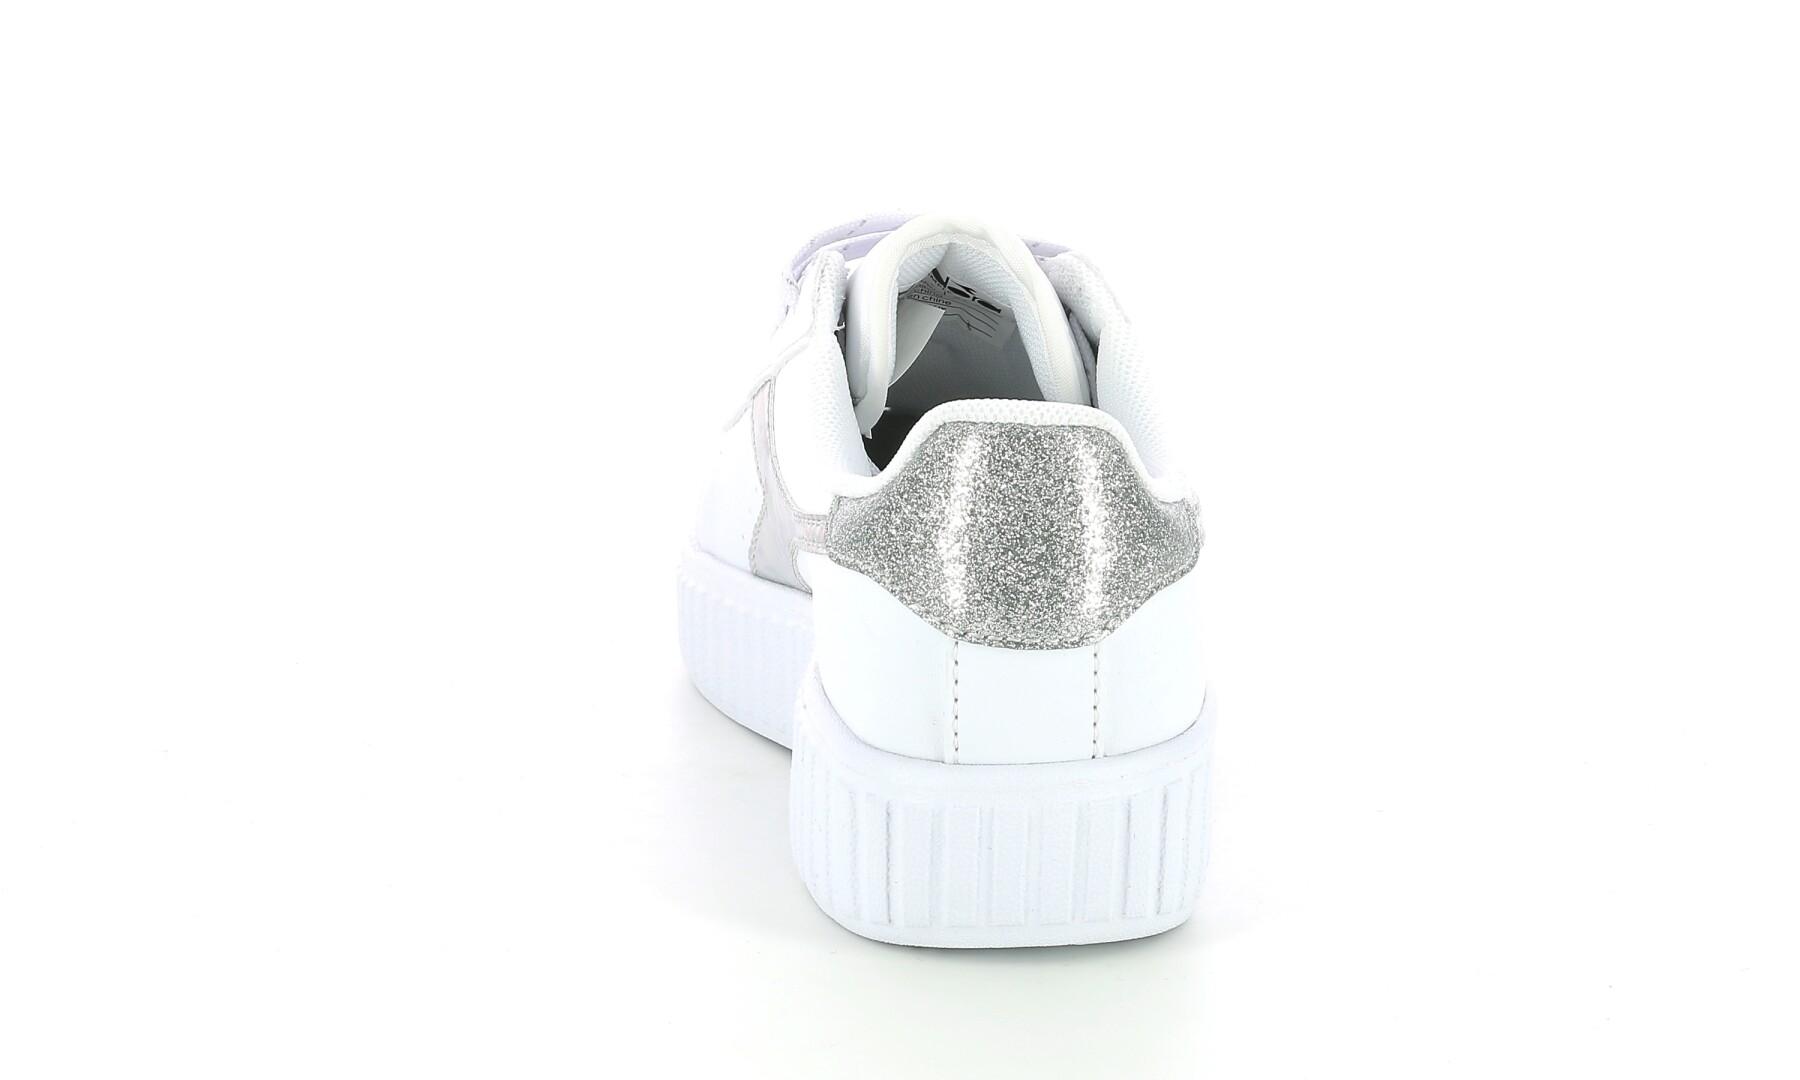 Children's sneakers Diadora Simple RunTD